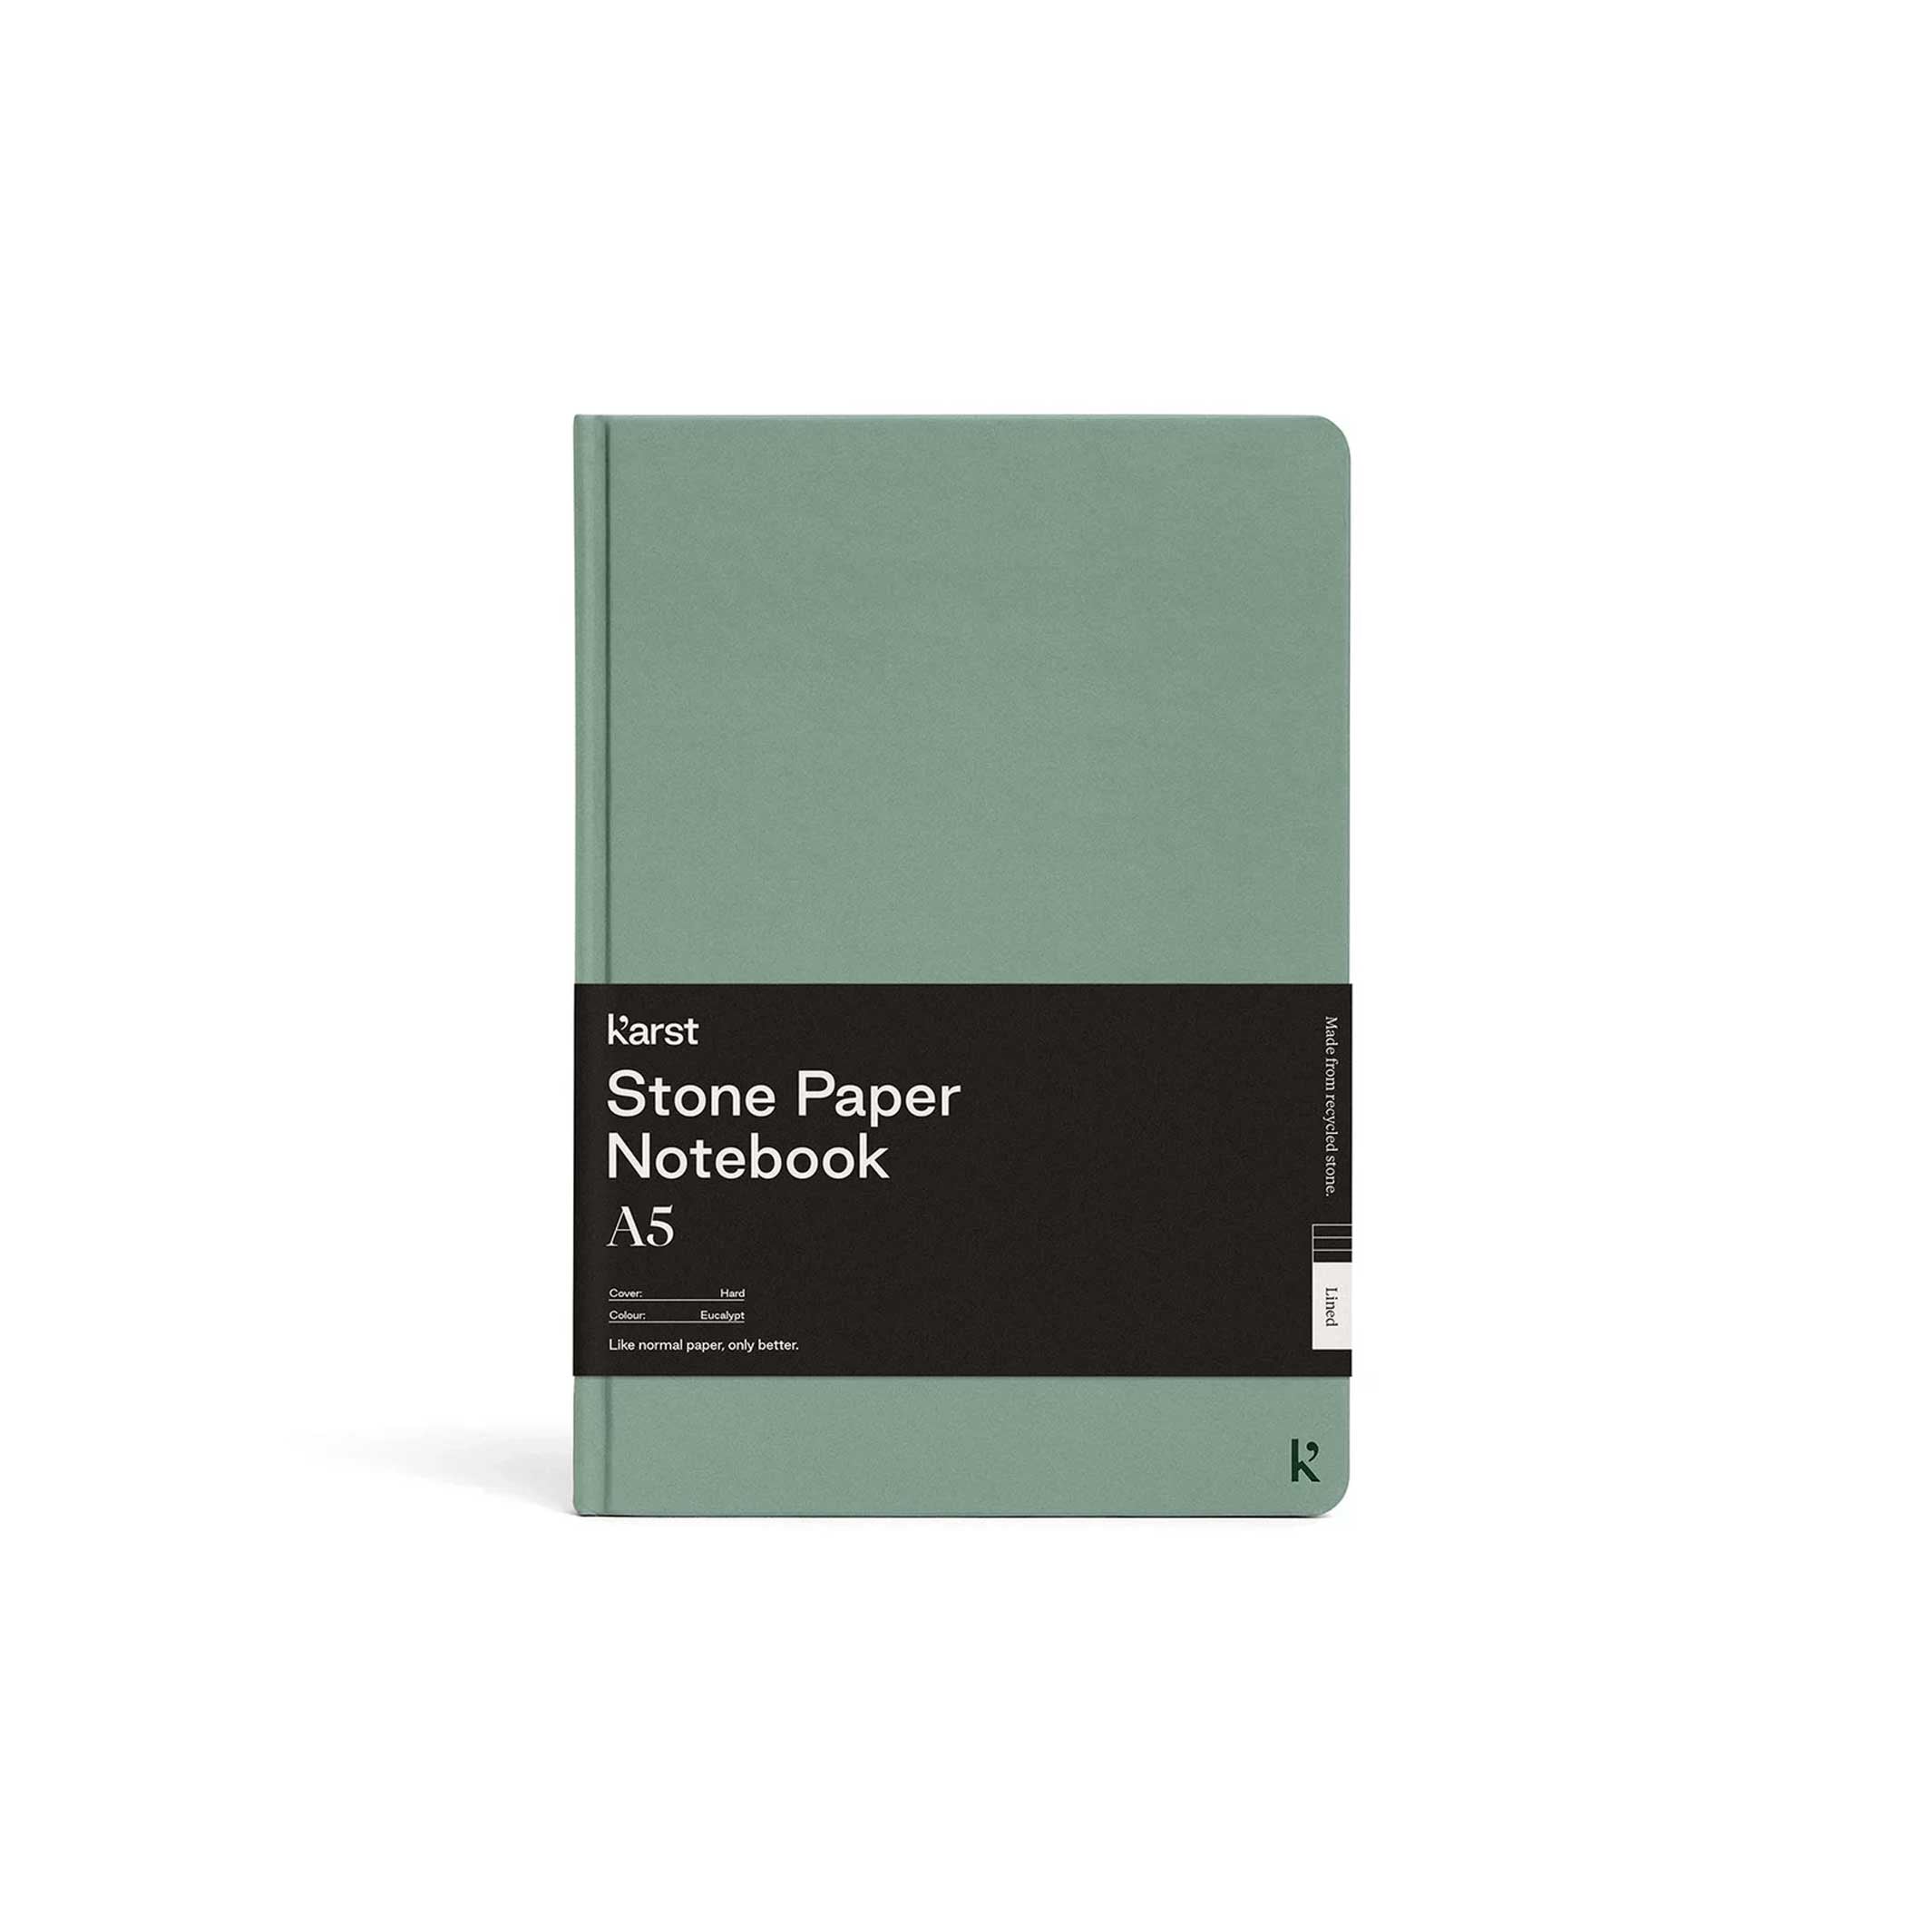 Hardcover NOTEBOOK A5 | Eukalyptus-grünes NOTIZBUCH | Karst Stone Paper